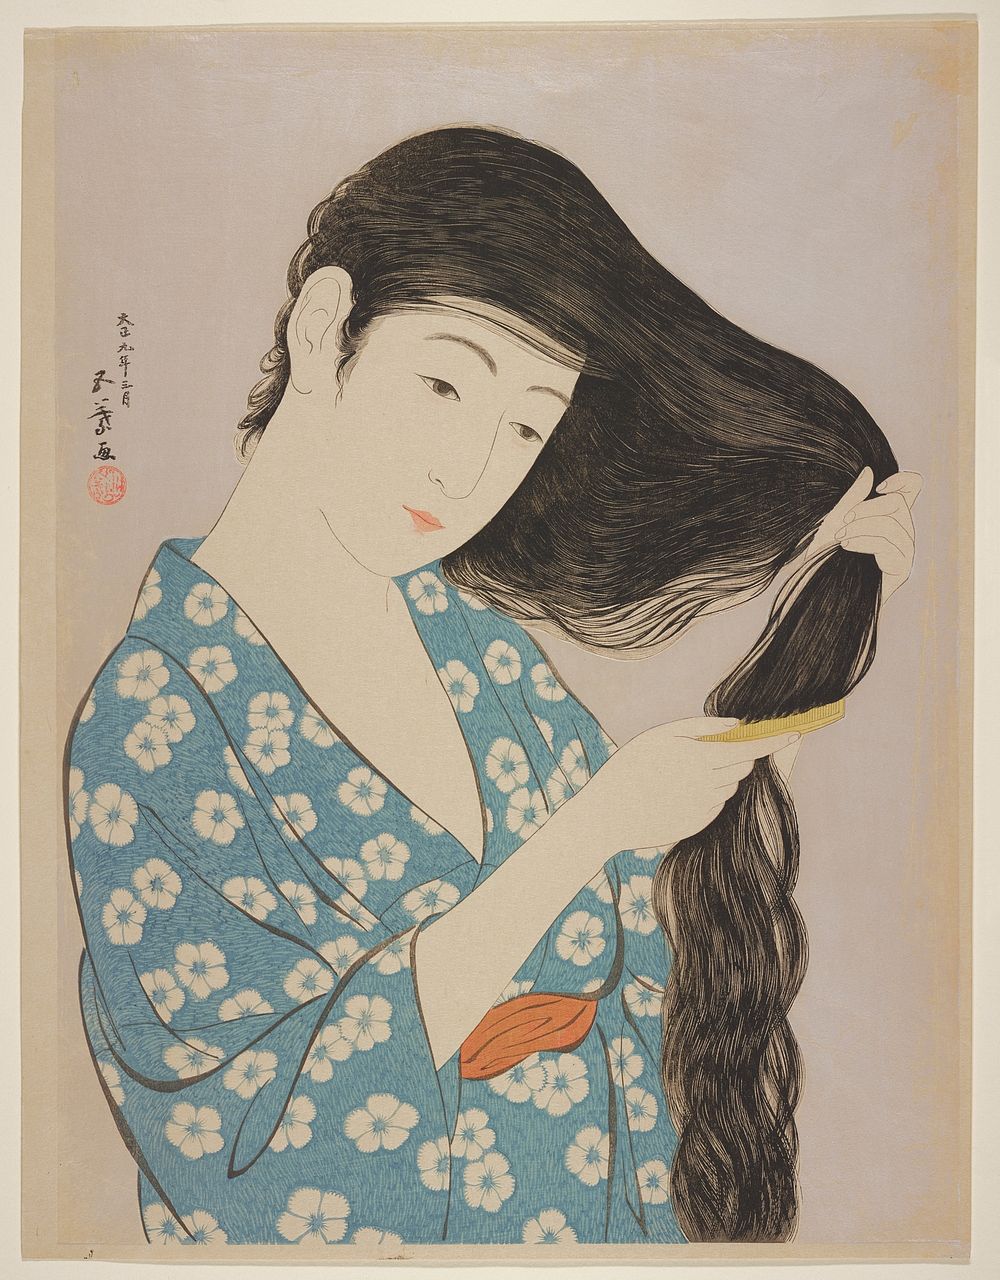 Woman Combing Her Hair (1920) print in high resolution by Goyō Hashiguchi.  